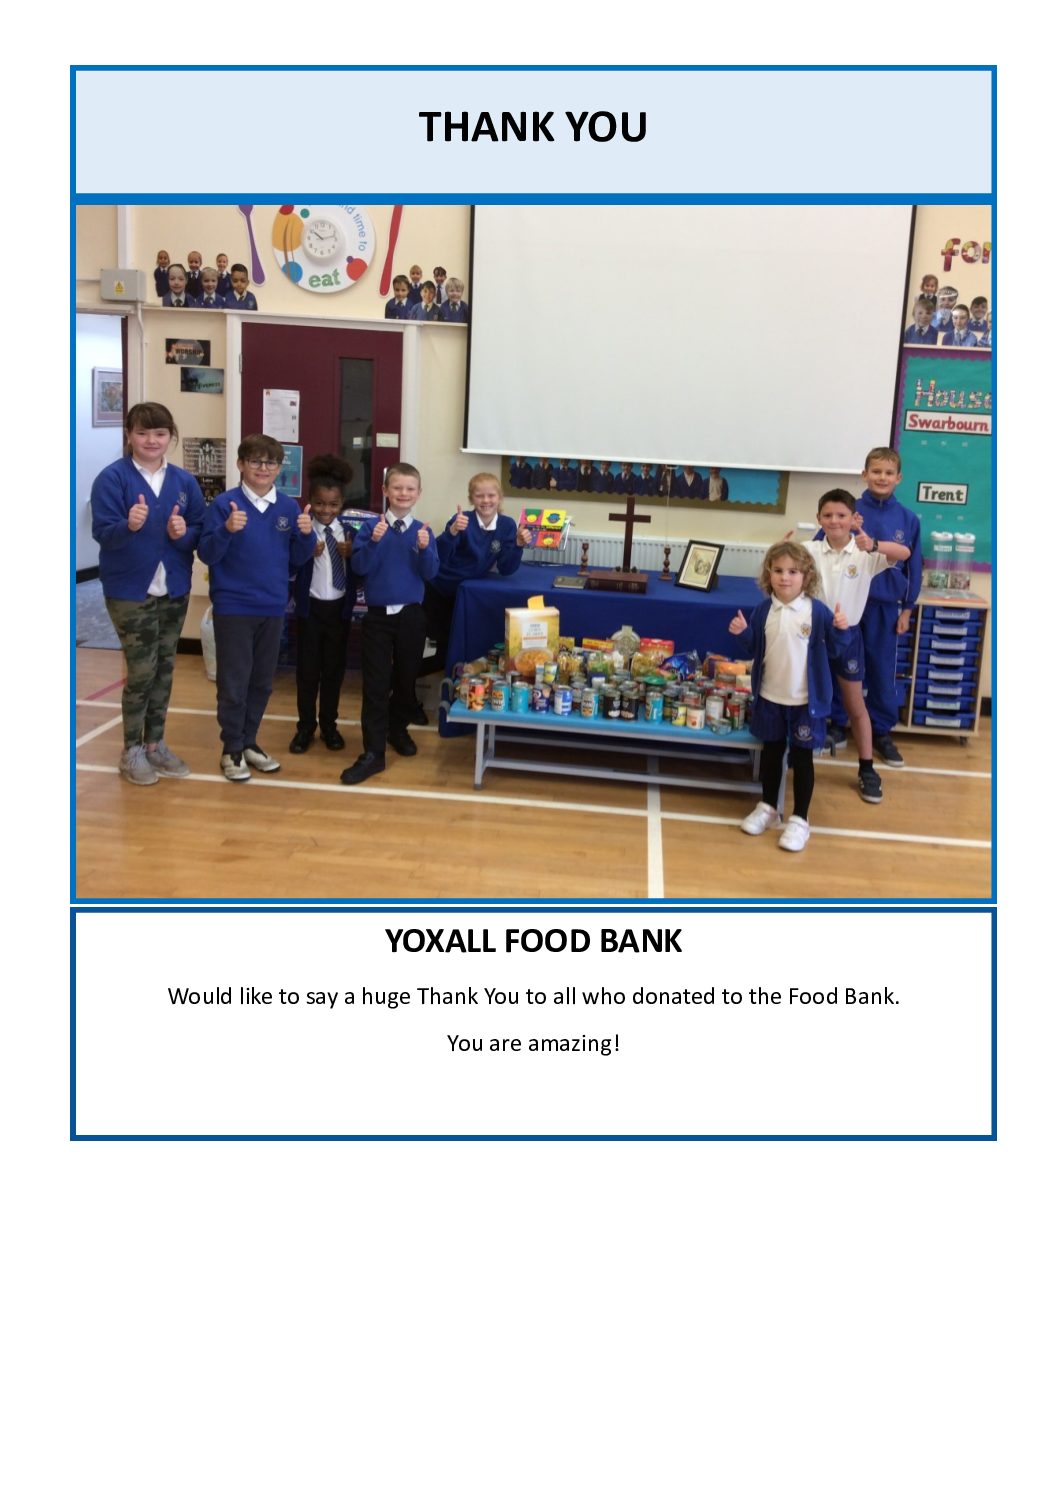 Yoxall Food Bank